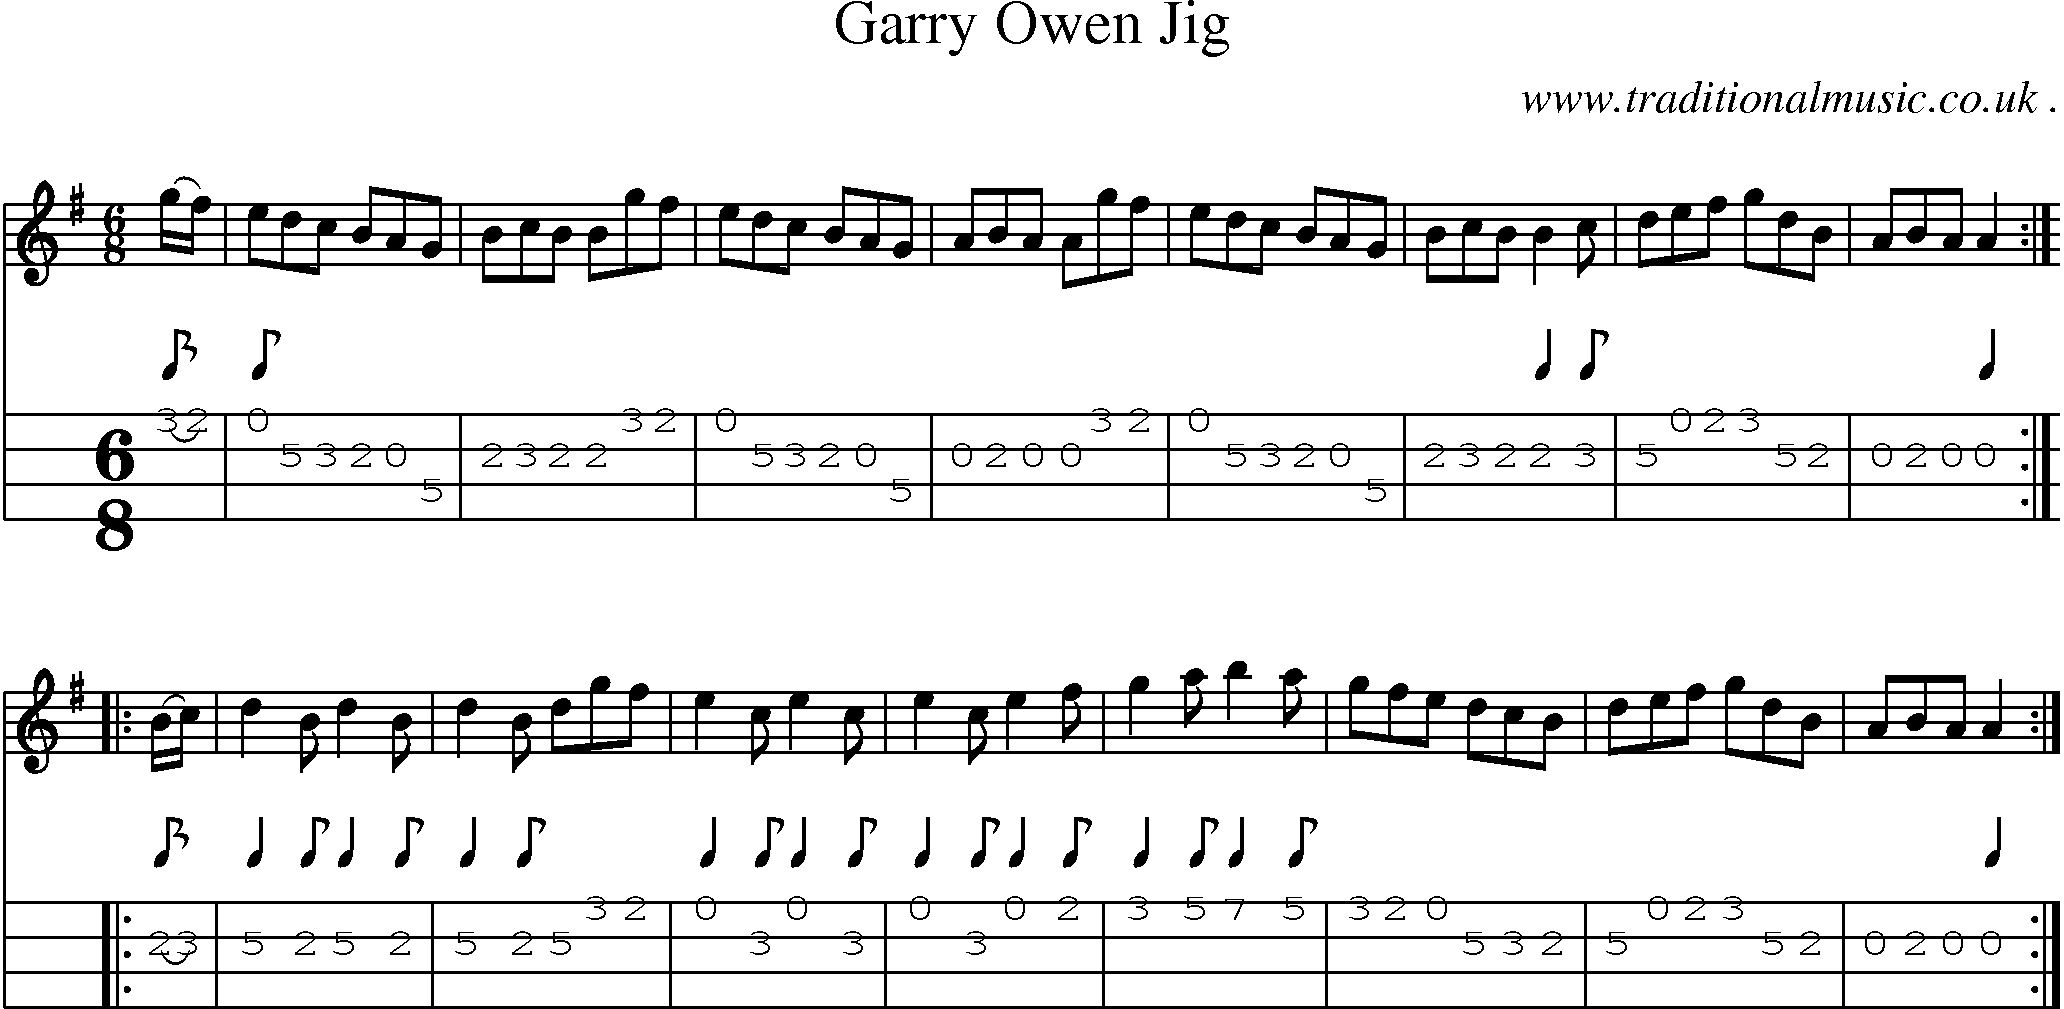 Sheet-Music and Mandolin Tabs for Garry Owen Jig